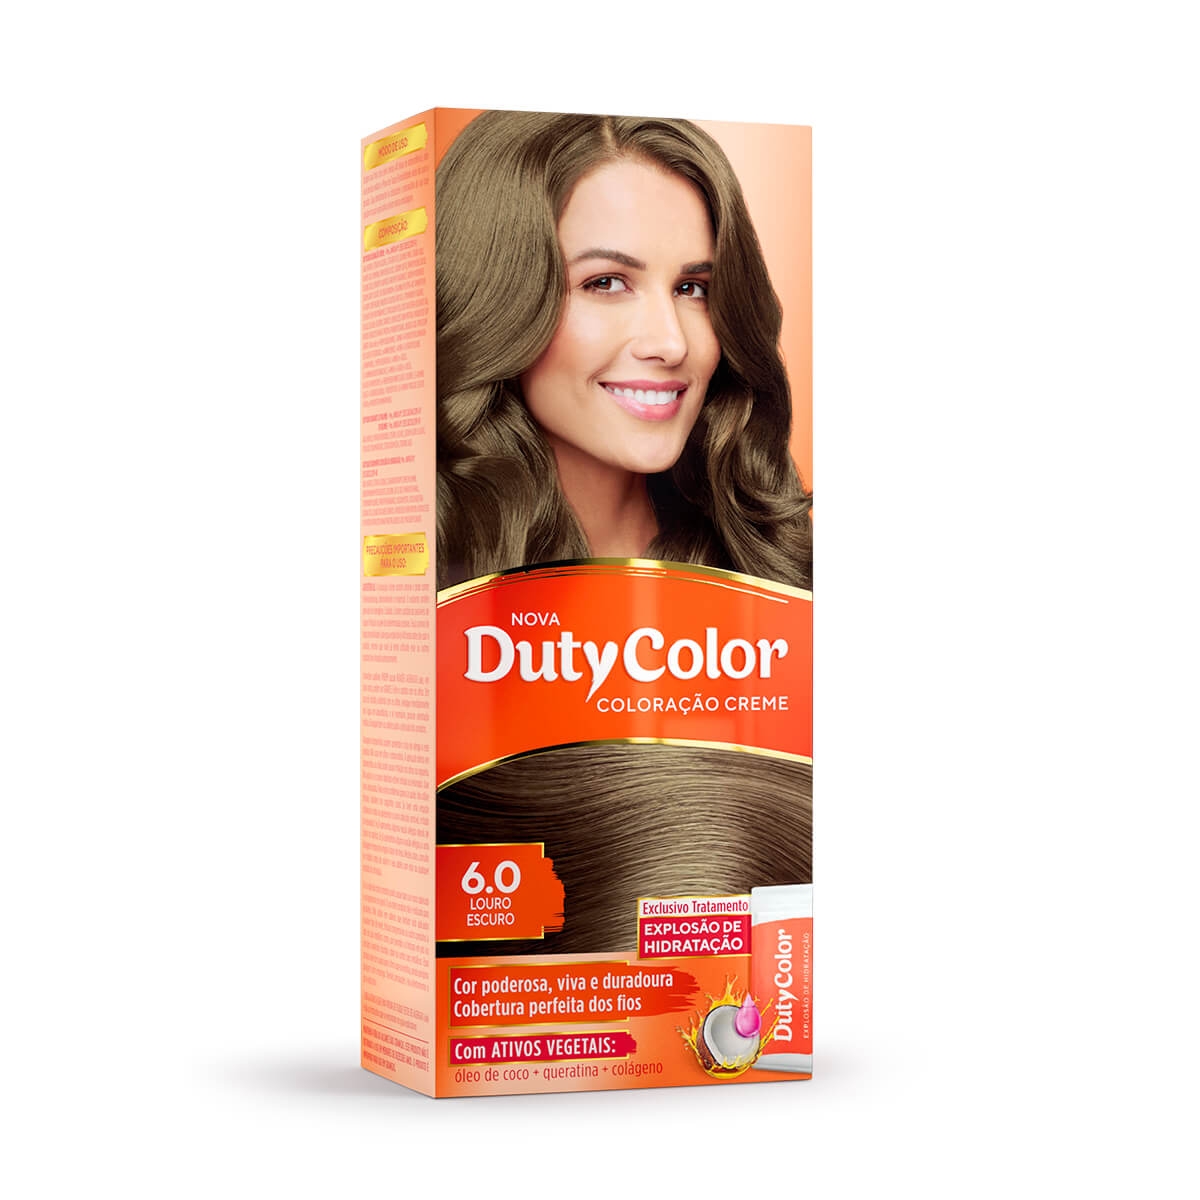 Coloração Creme DutyColor para Cabelos Cor 6.0 Louro Escuro 1 Unidade